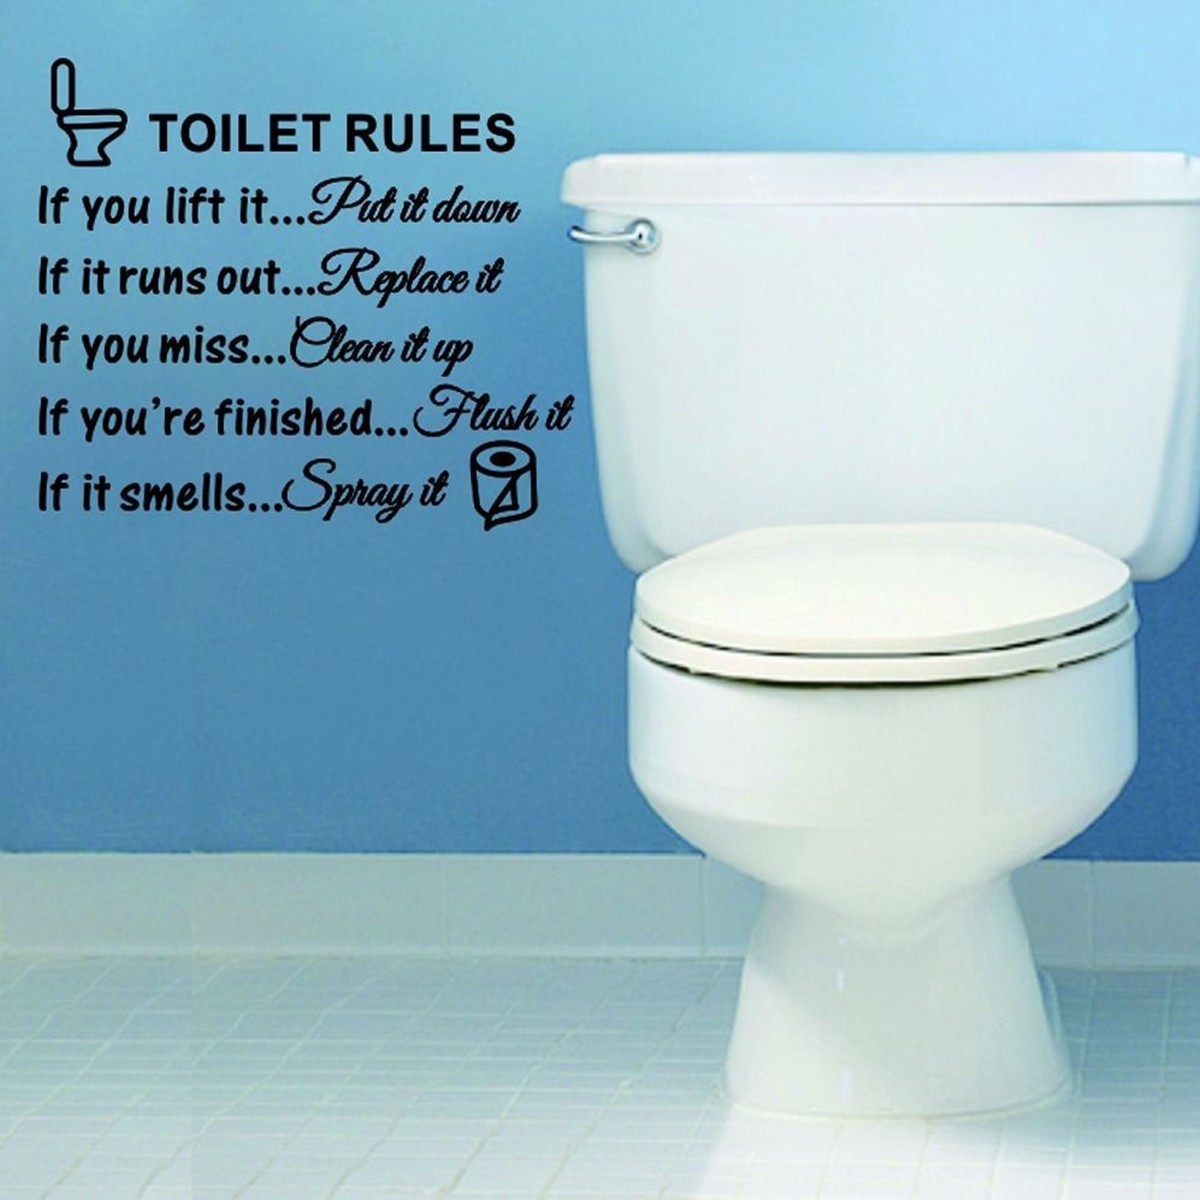 DIY-Toilet-Rules-Bathroom-Toilet-Wall-Sticker-Vinyl-Art-Decals-Home-Office-Decoration-1722046-6